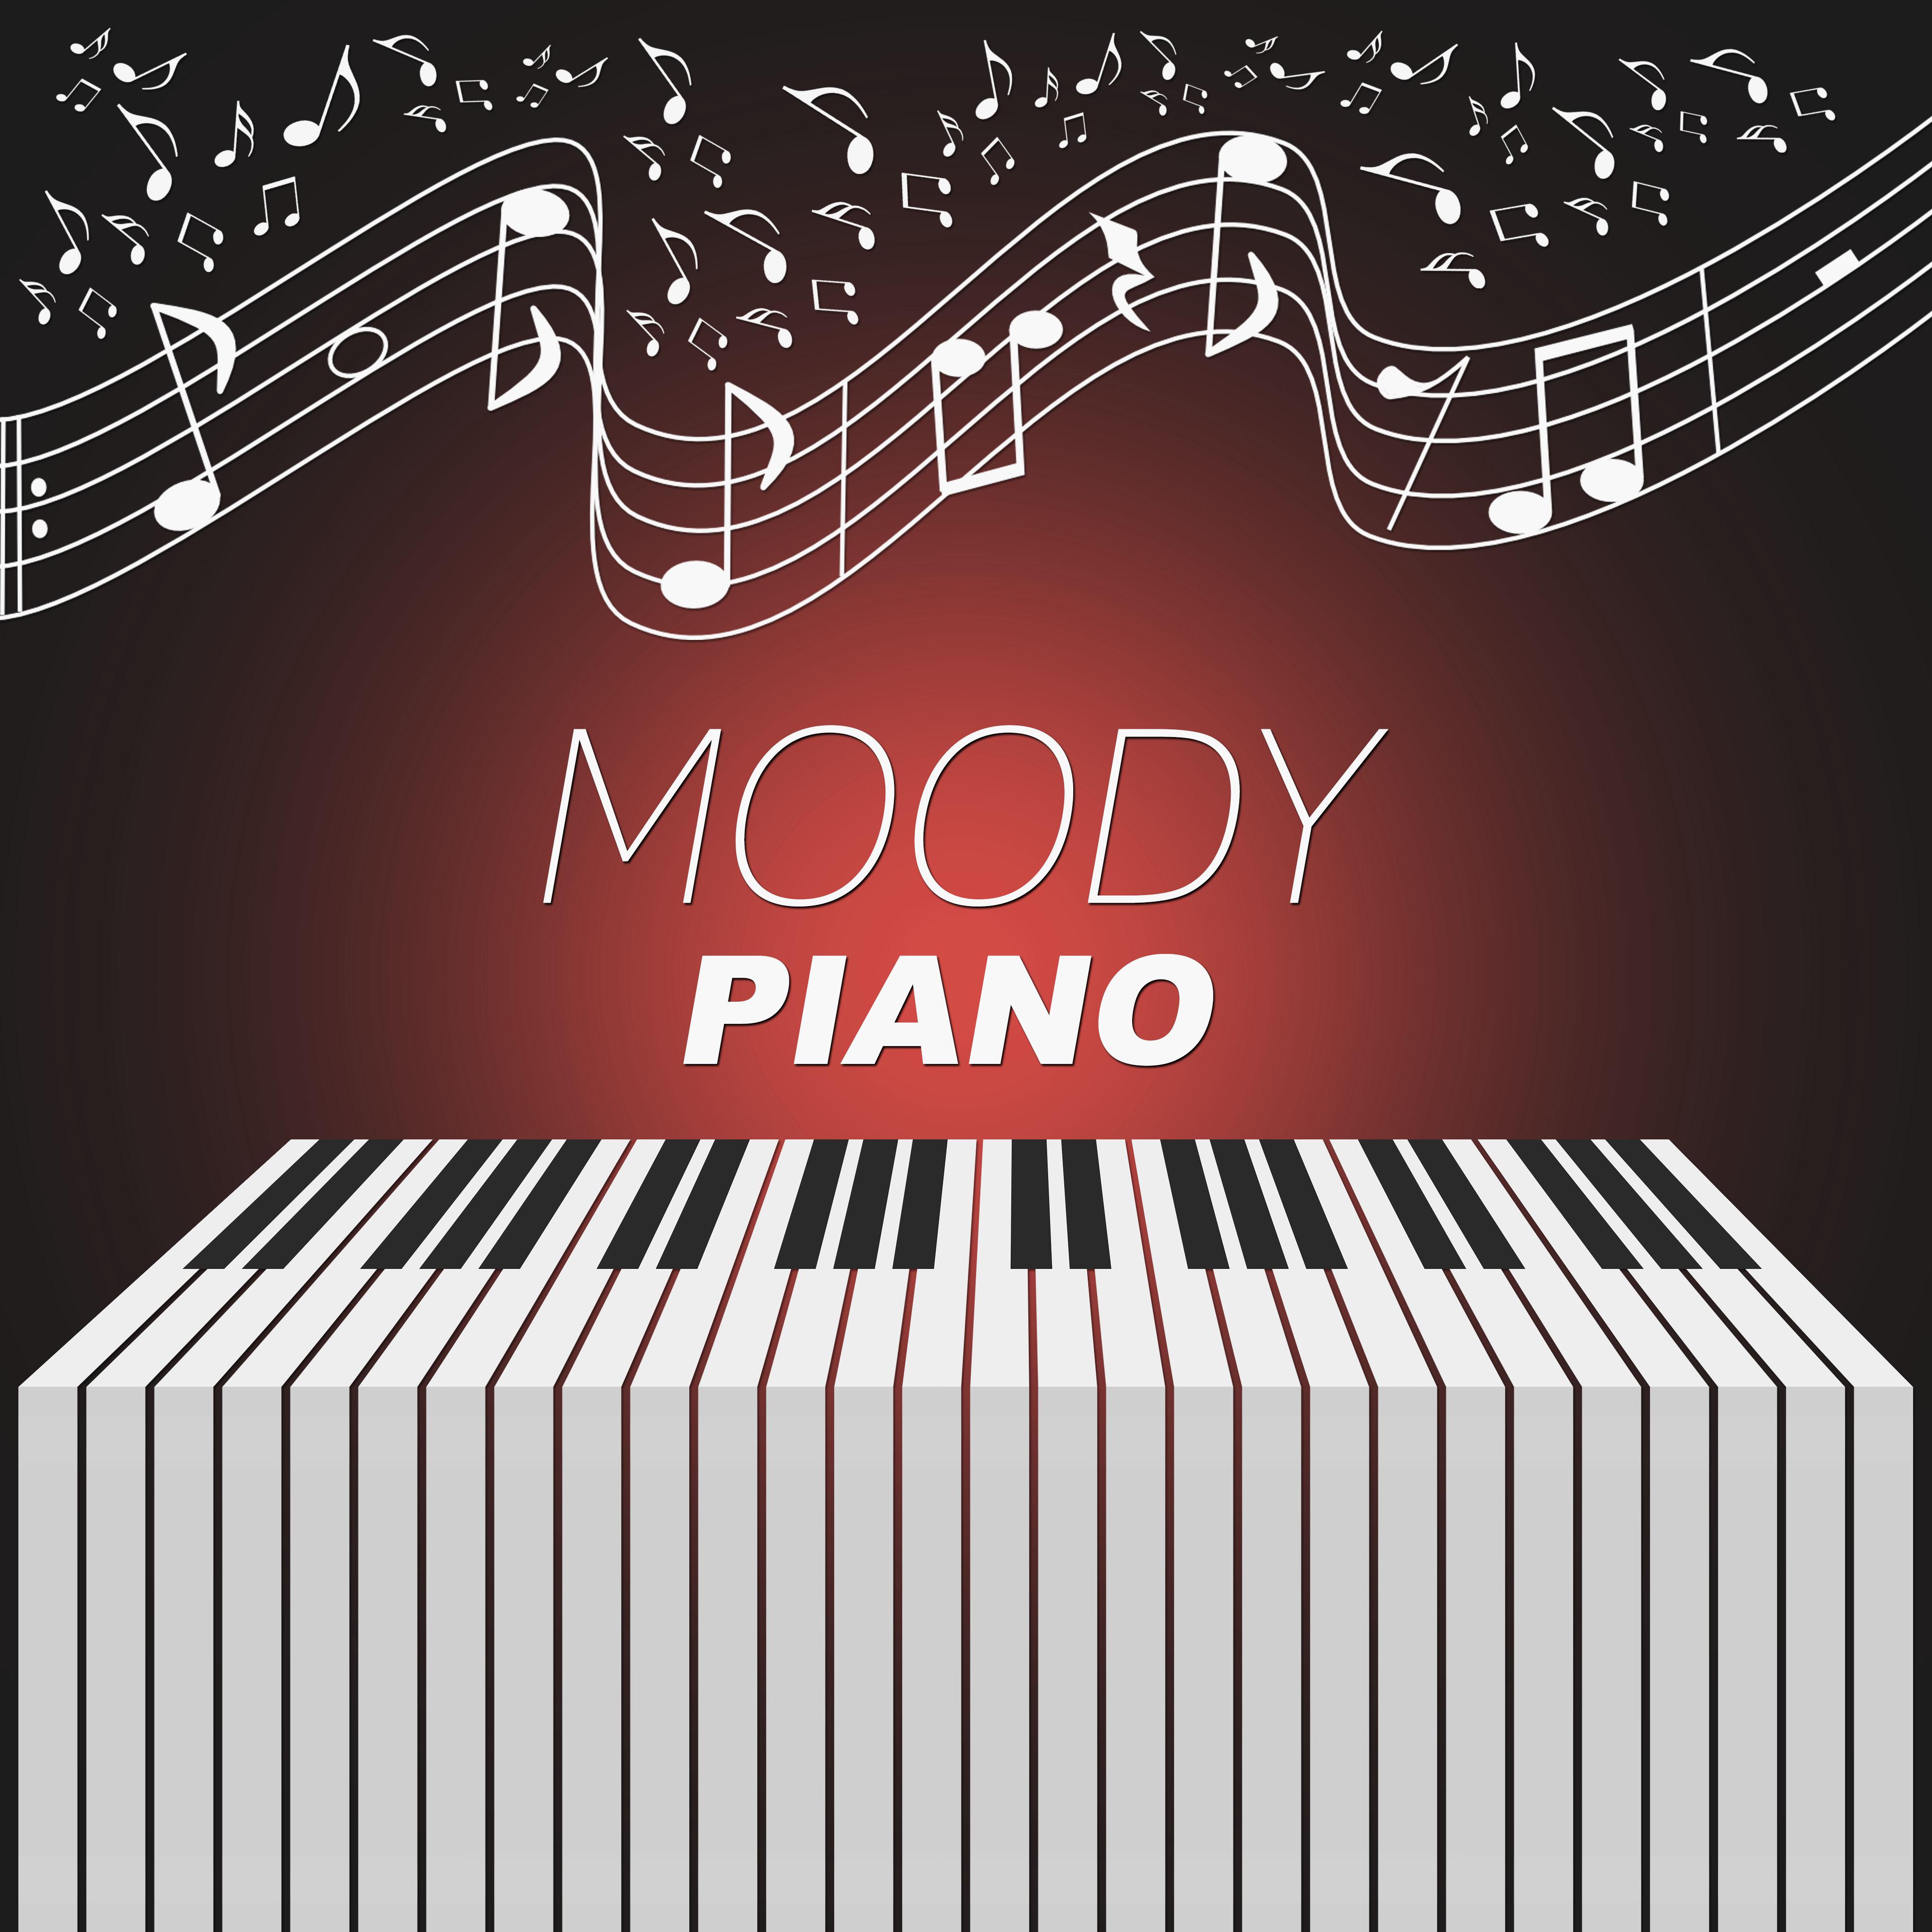 Moody Piano – Jazz Piano, Evening Dance, Soft Sounds to Relax, Meditation Jazz